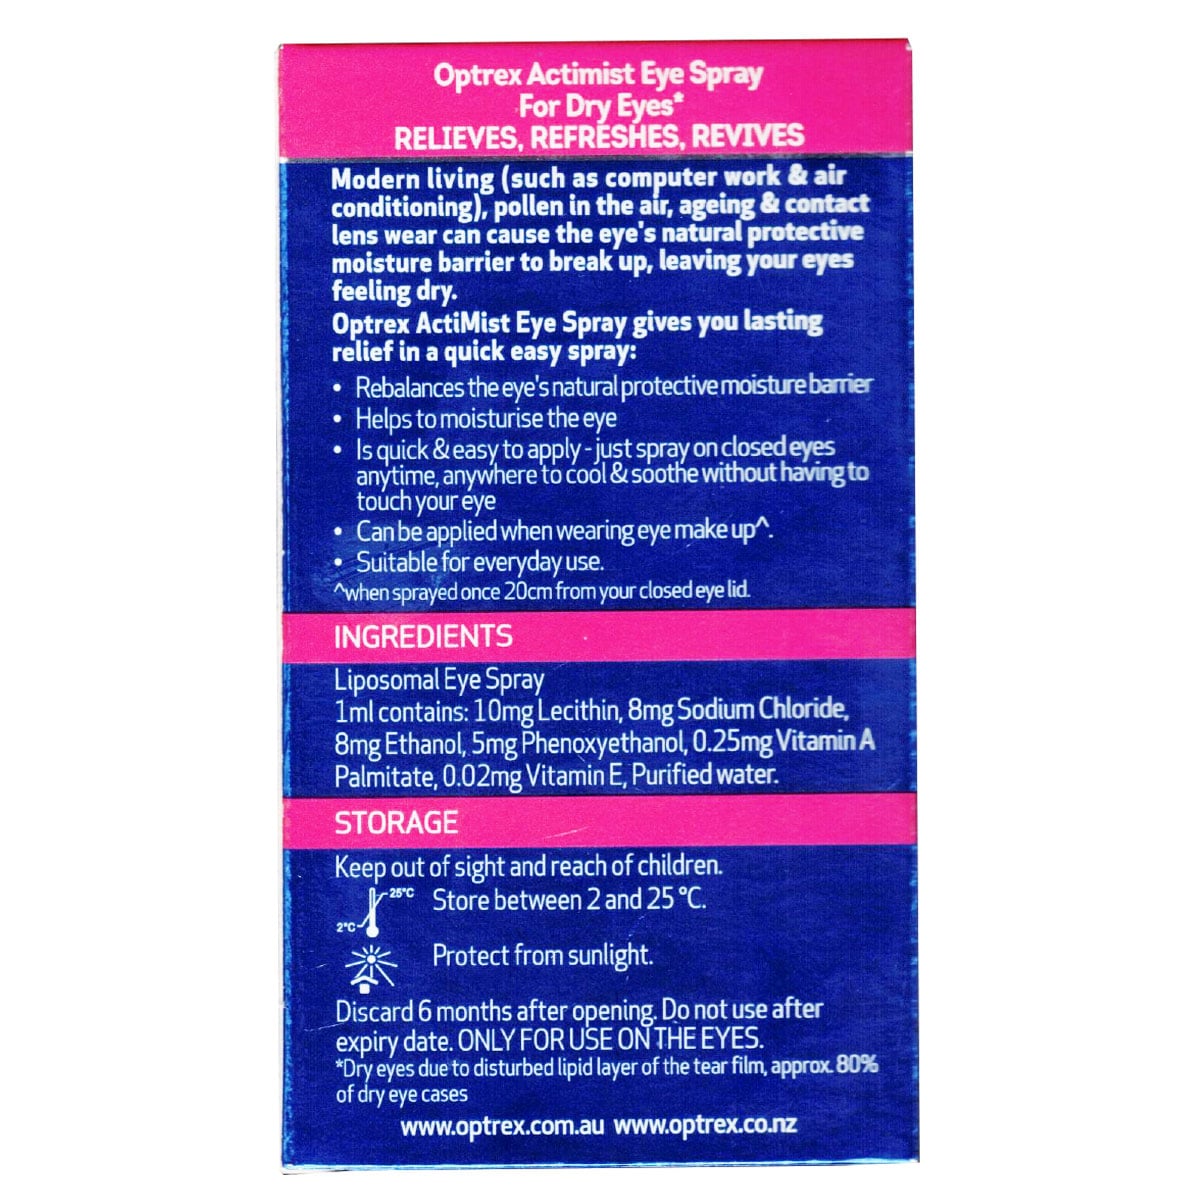 Optrex ActiMist 2in1 Eye Spray for Dry & Irritated Eyes 10ml